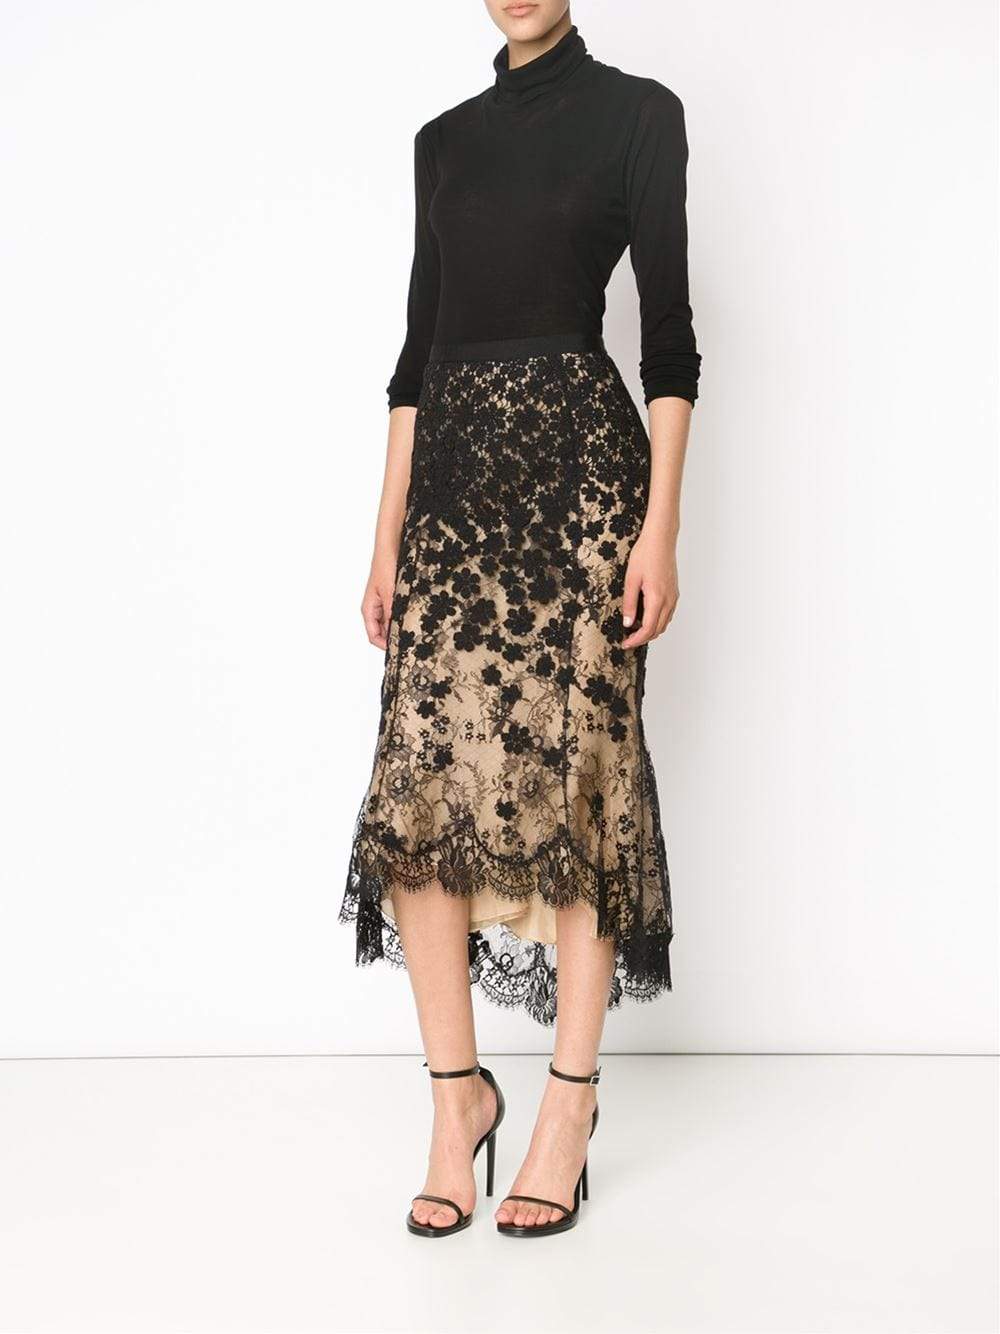 OSCAR DE LA RENTA-High-Low Lace Skirt-BLACK